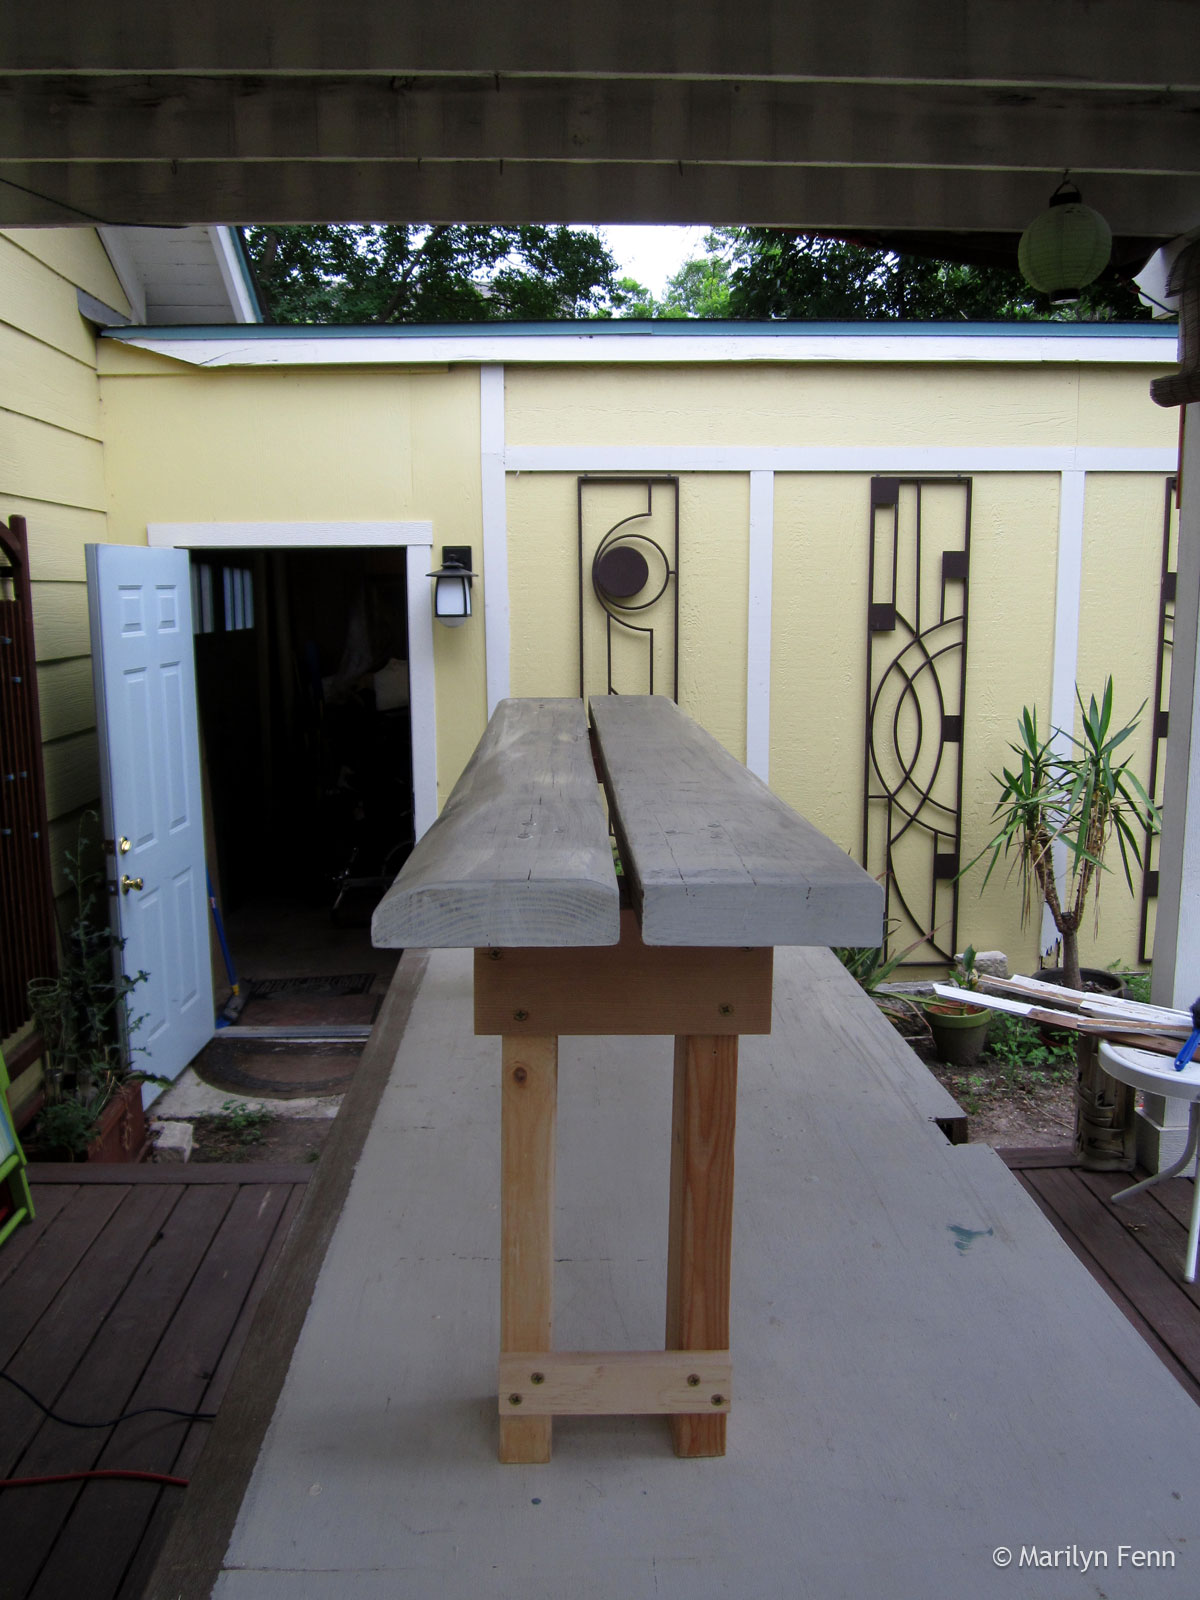 Narrow-stance garden bench